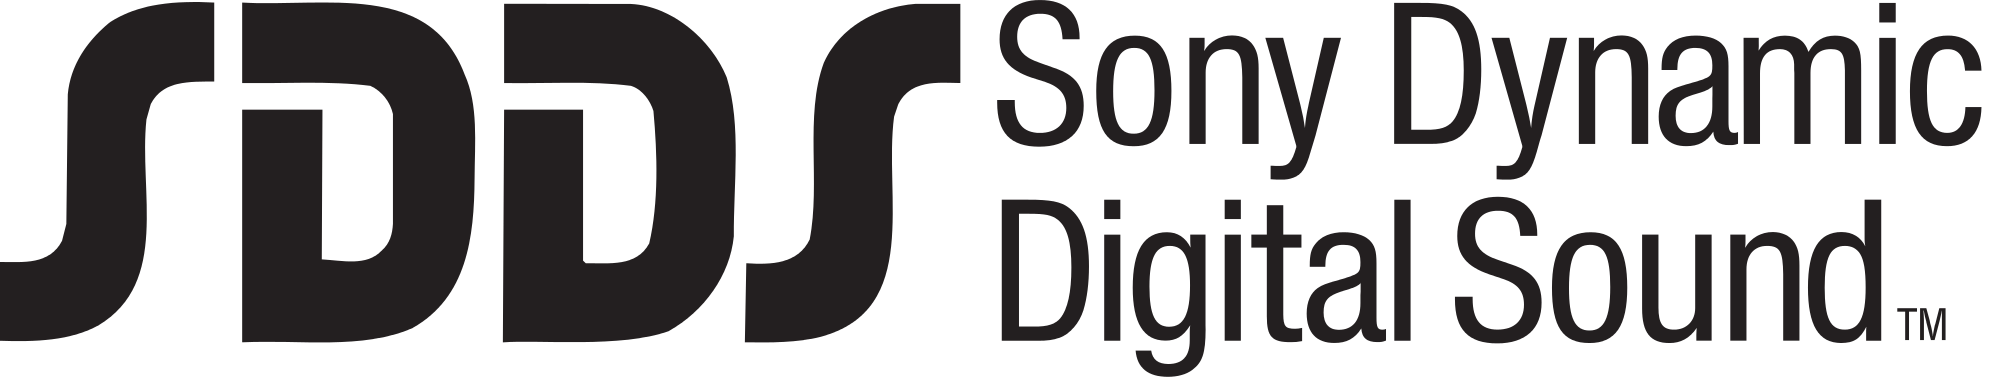 Sdds Logo - File:SDDS-Logo.svg - Wikimedia Commons